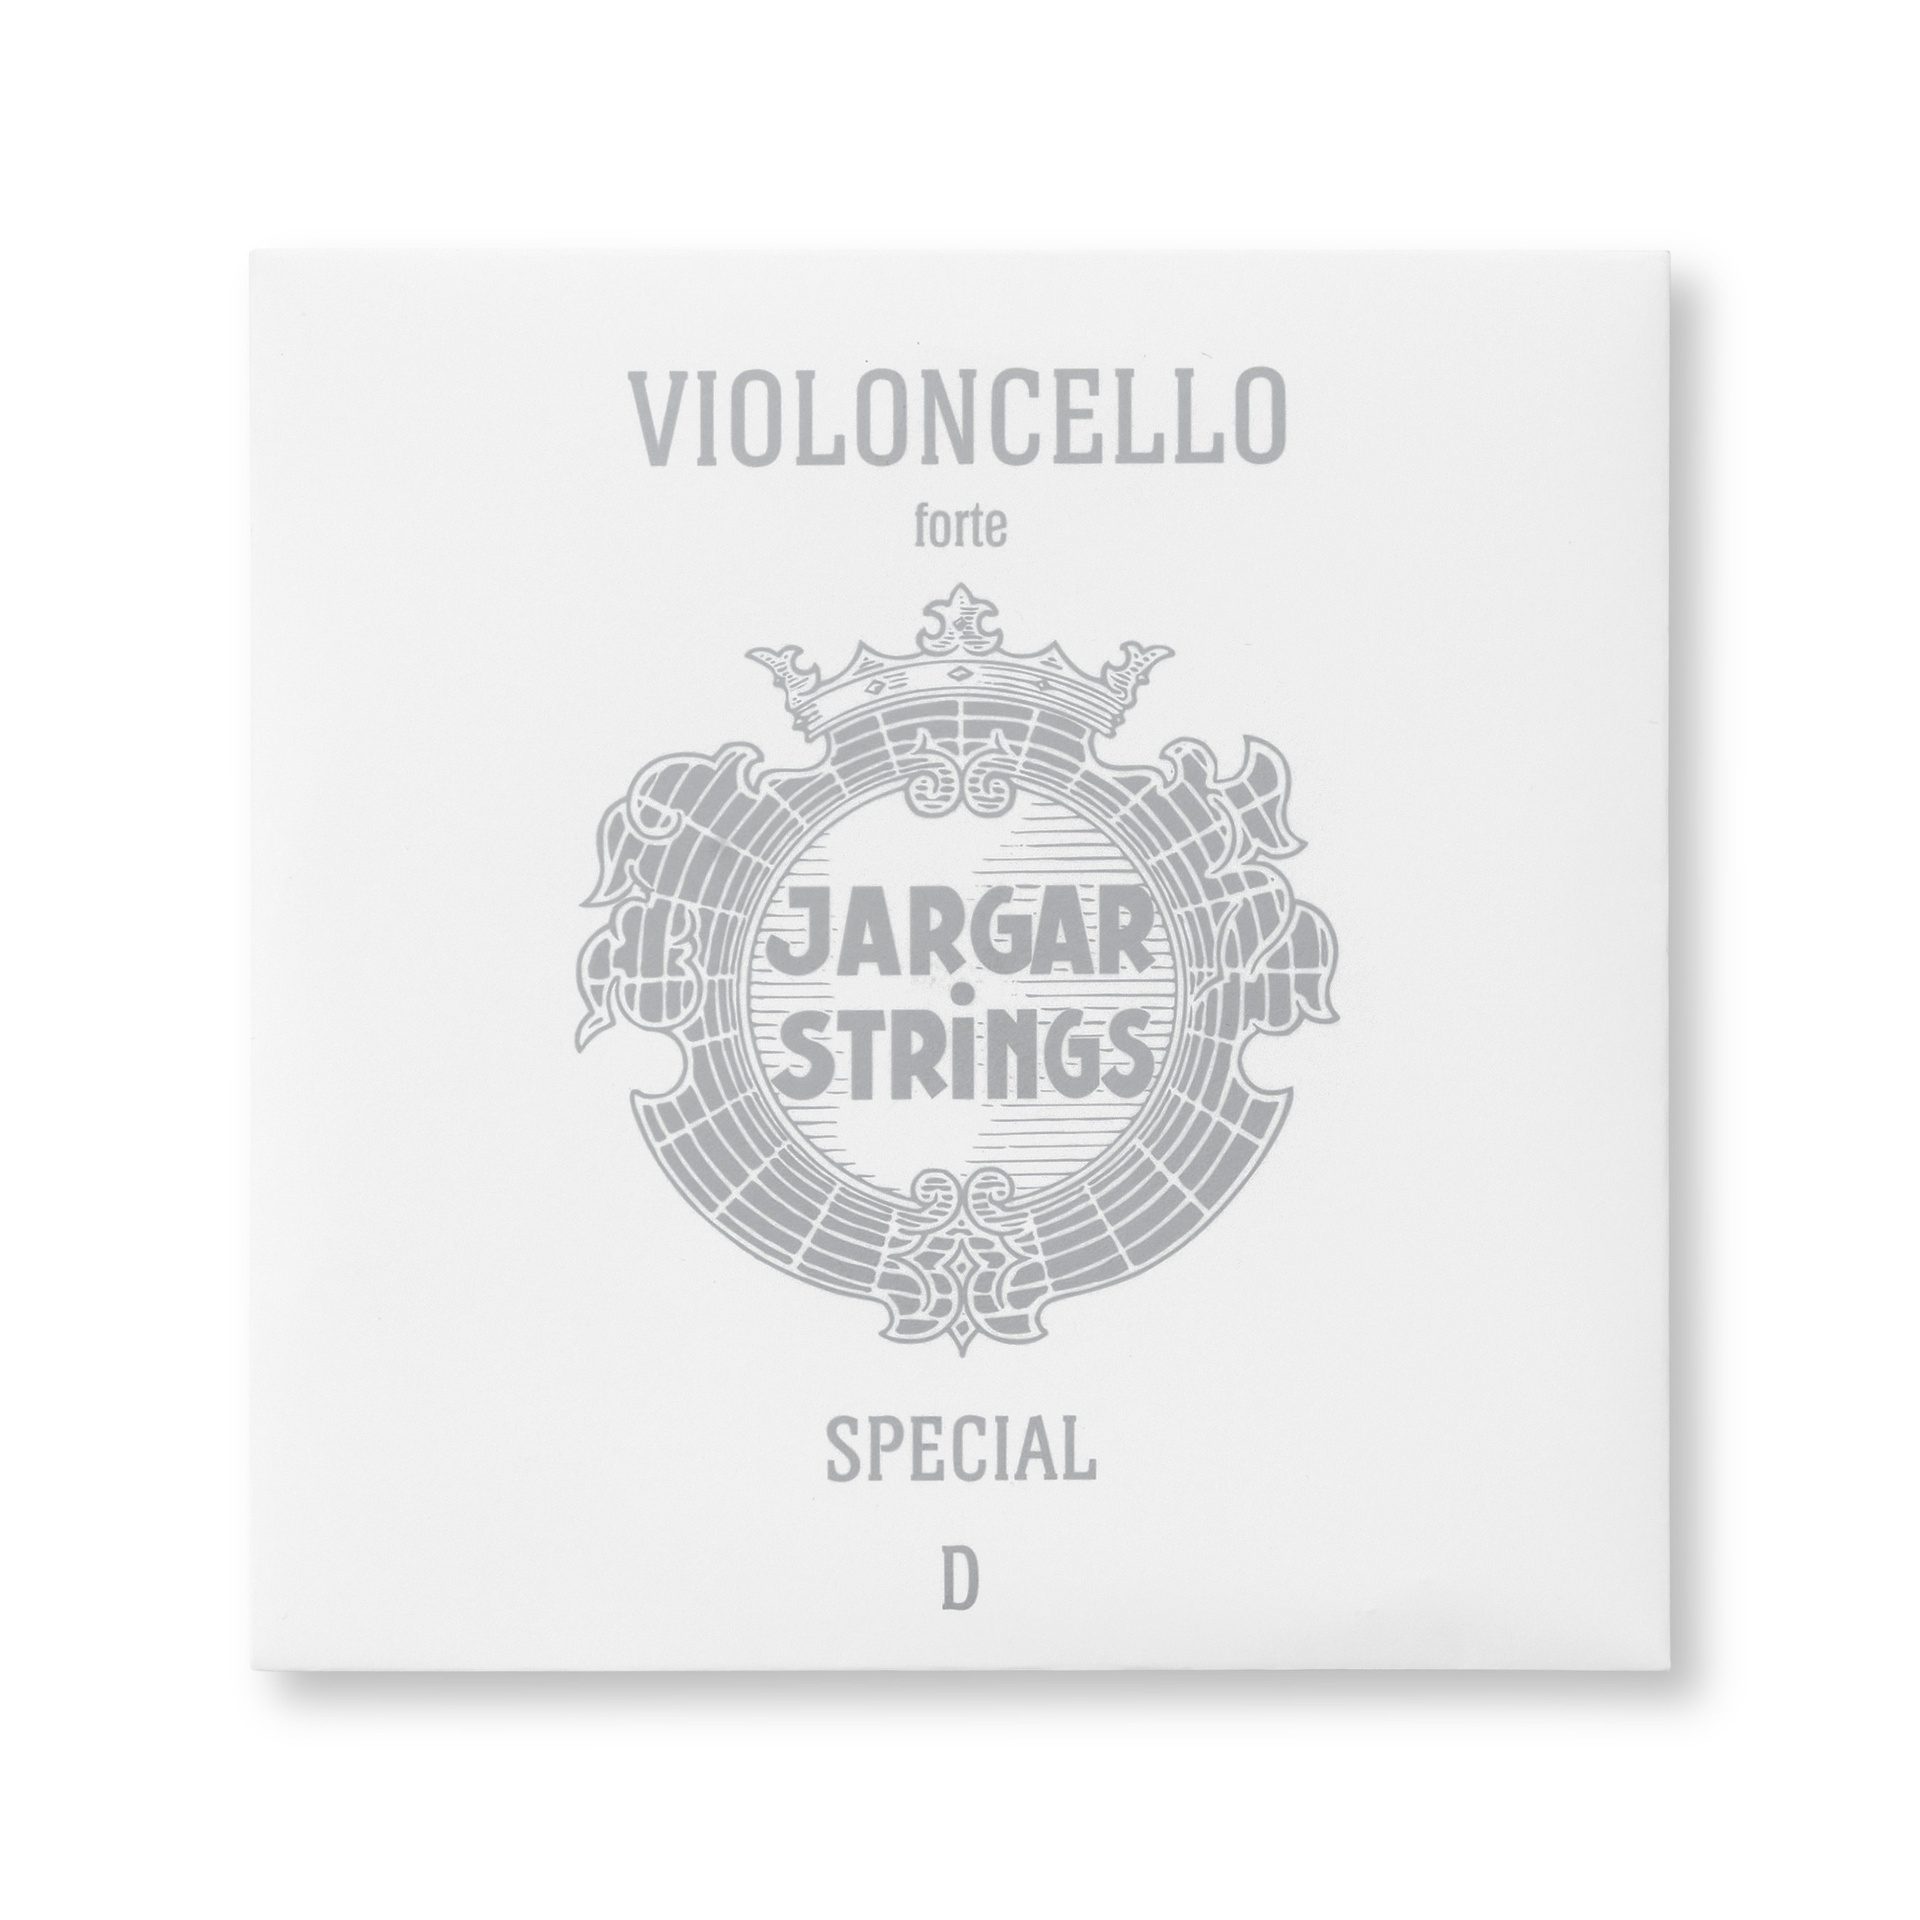 Special Violoncello - Forte, Single D String, 4/4